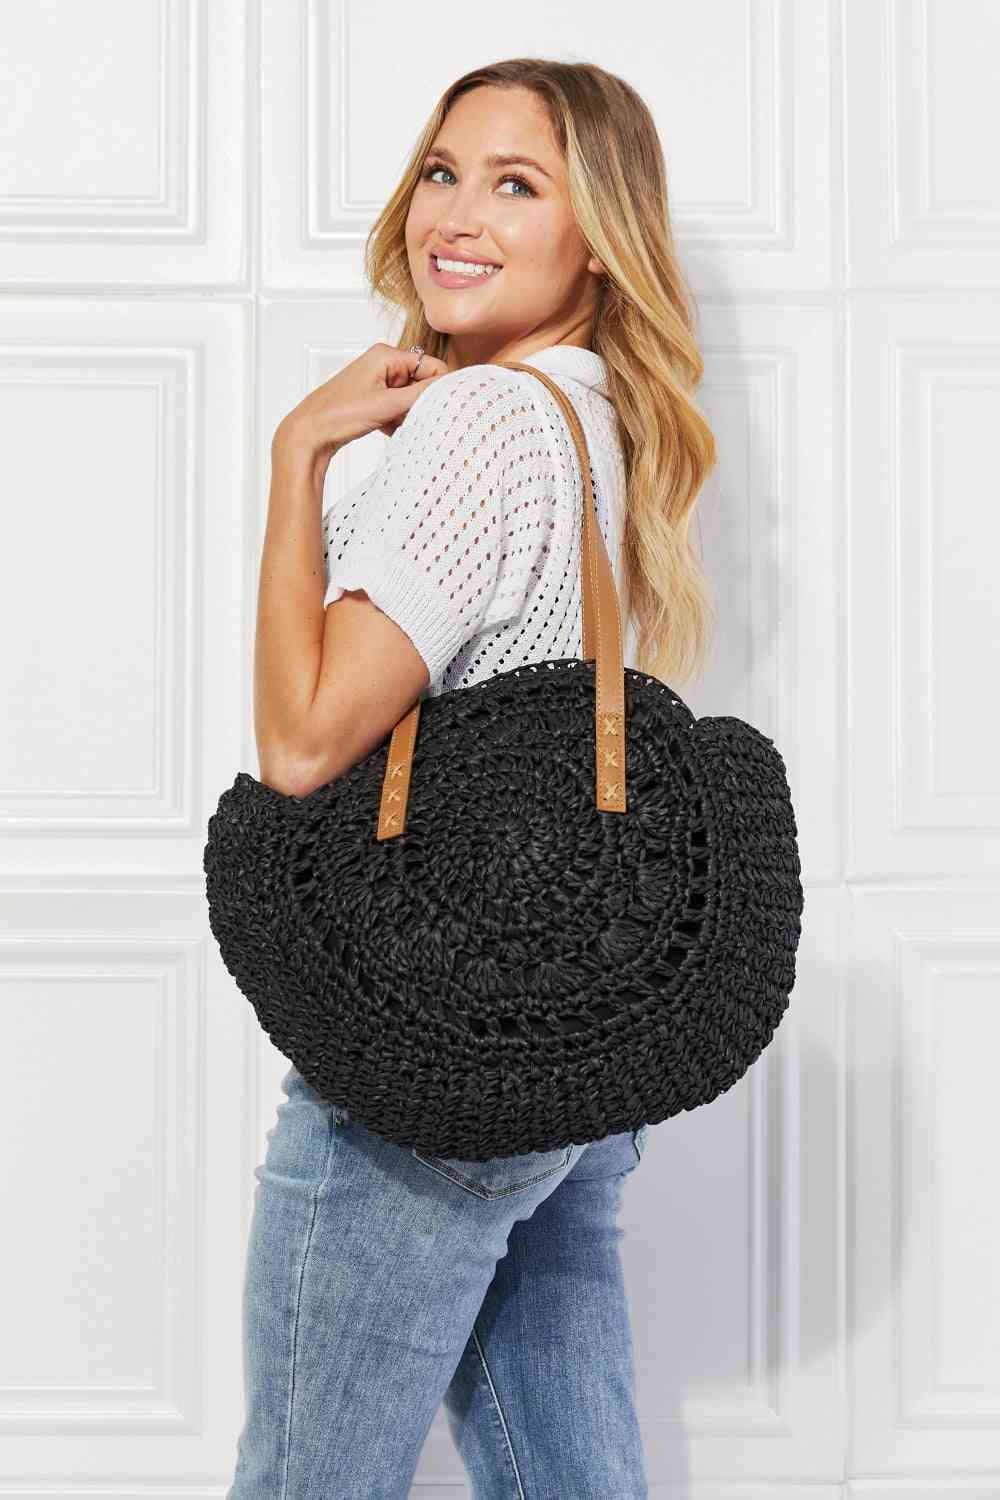 Justin Taylor C'est La Vie Crochet Handbag in Black Black One Size